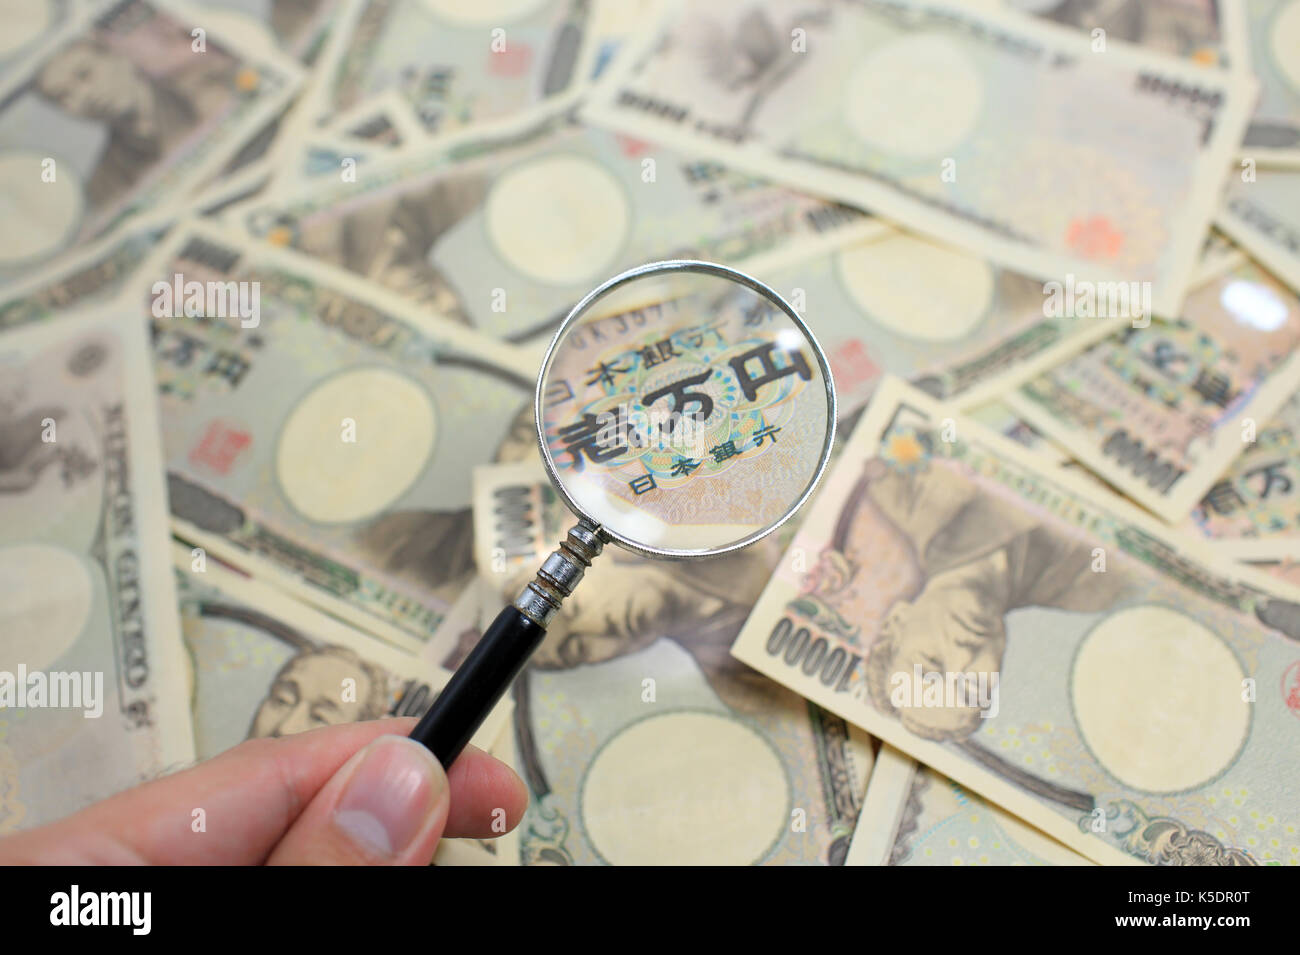 Yen Banknote Stockfoto